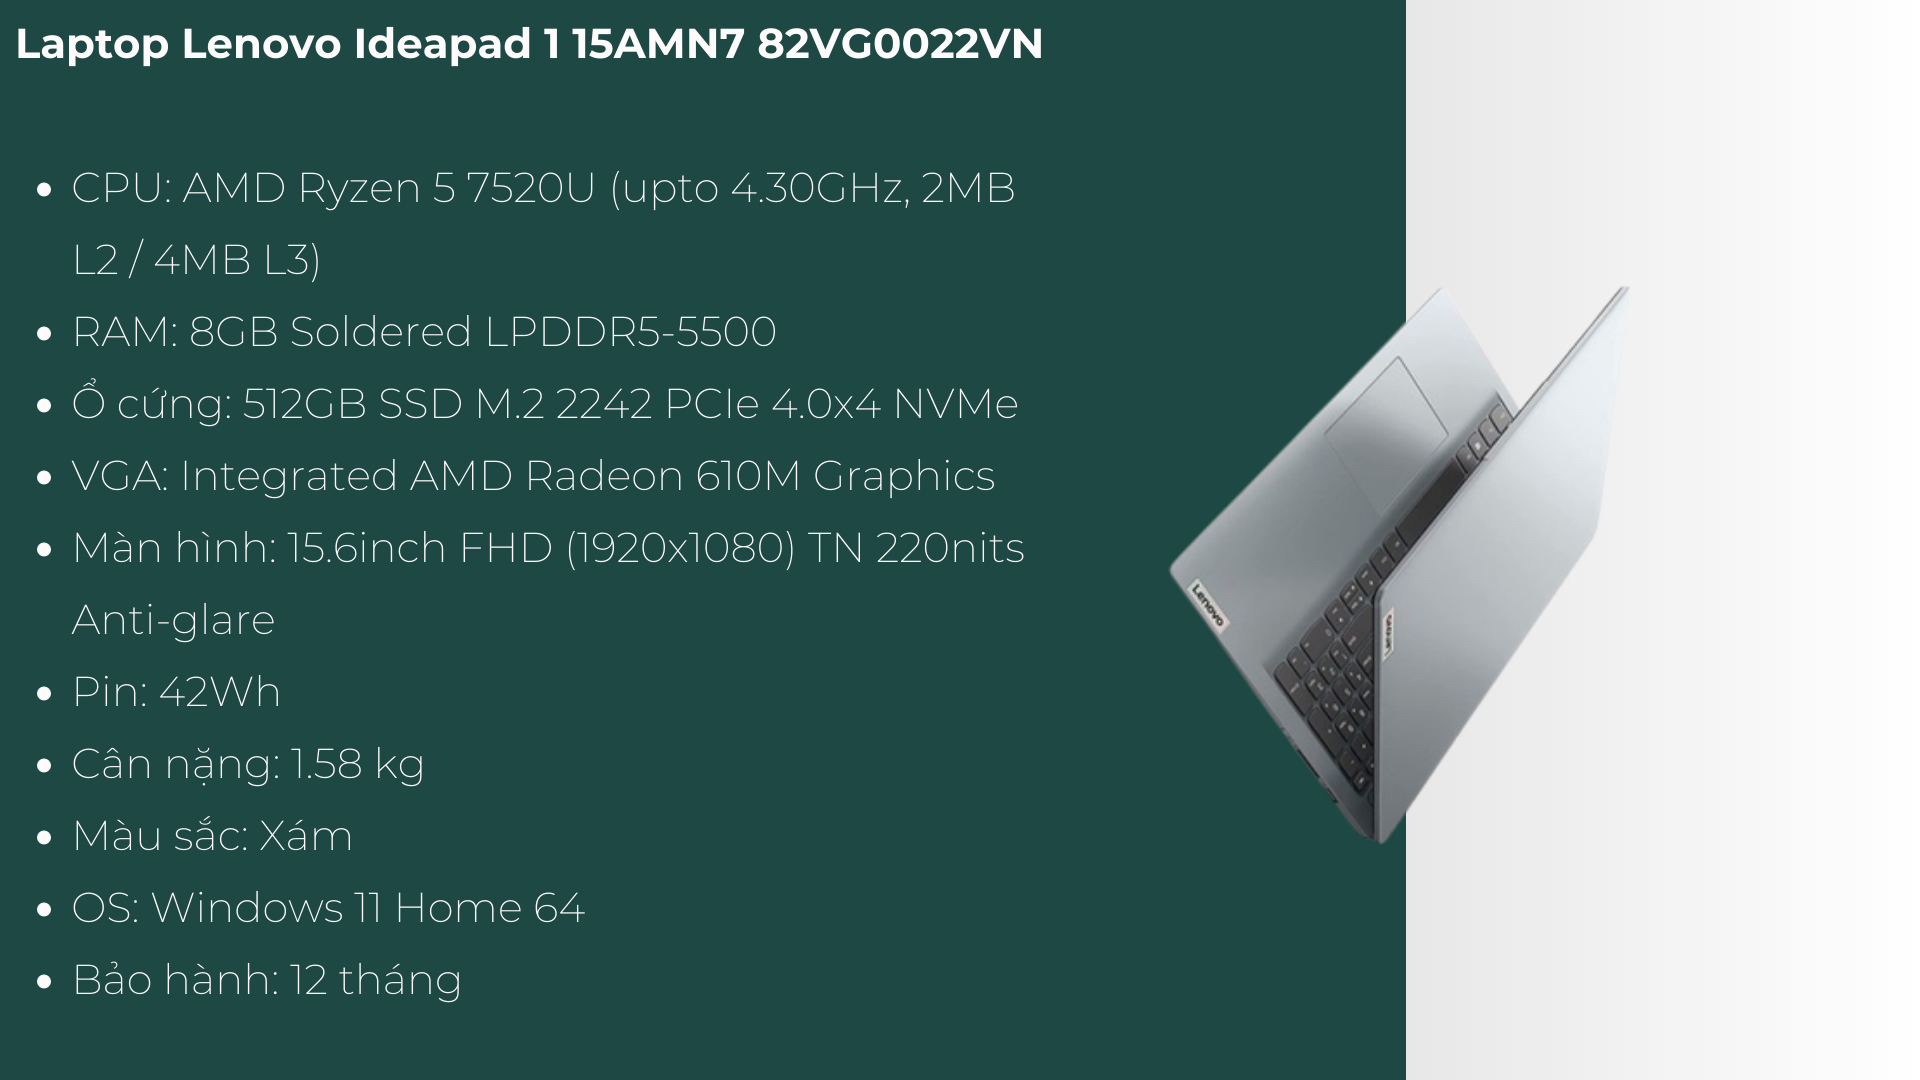 diem-danh-10-laptop-danh-cho-sinh-vien-2023-gia-re-11